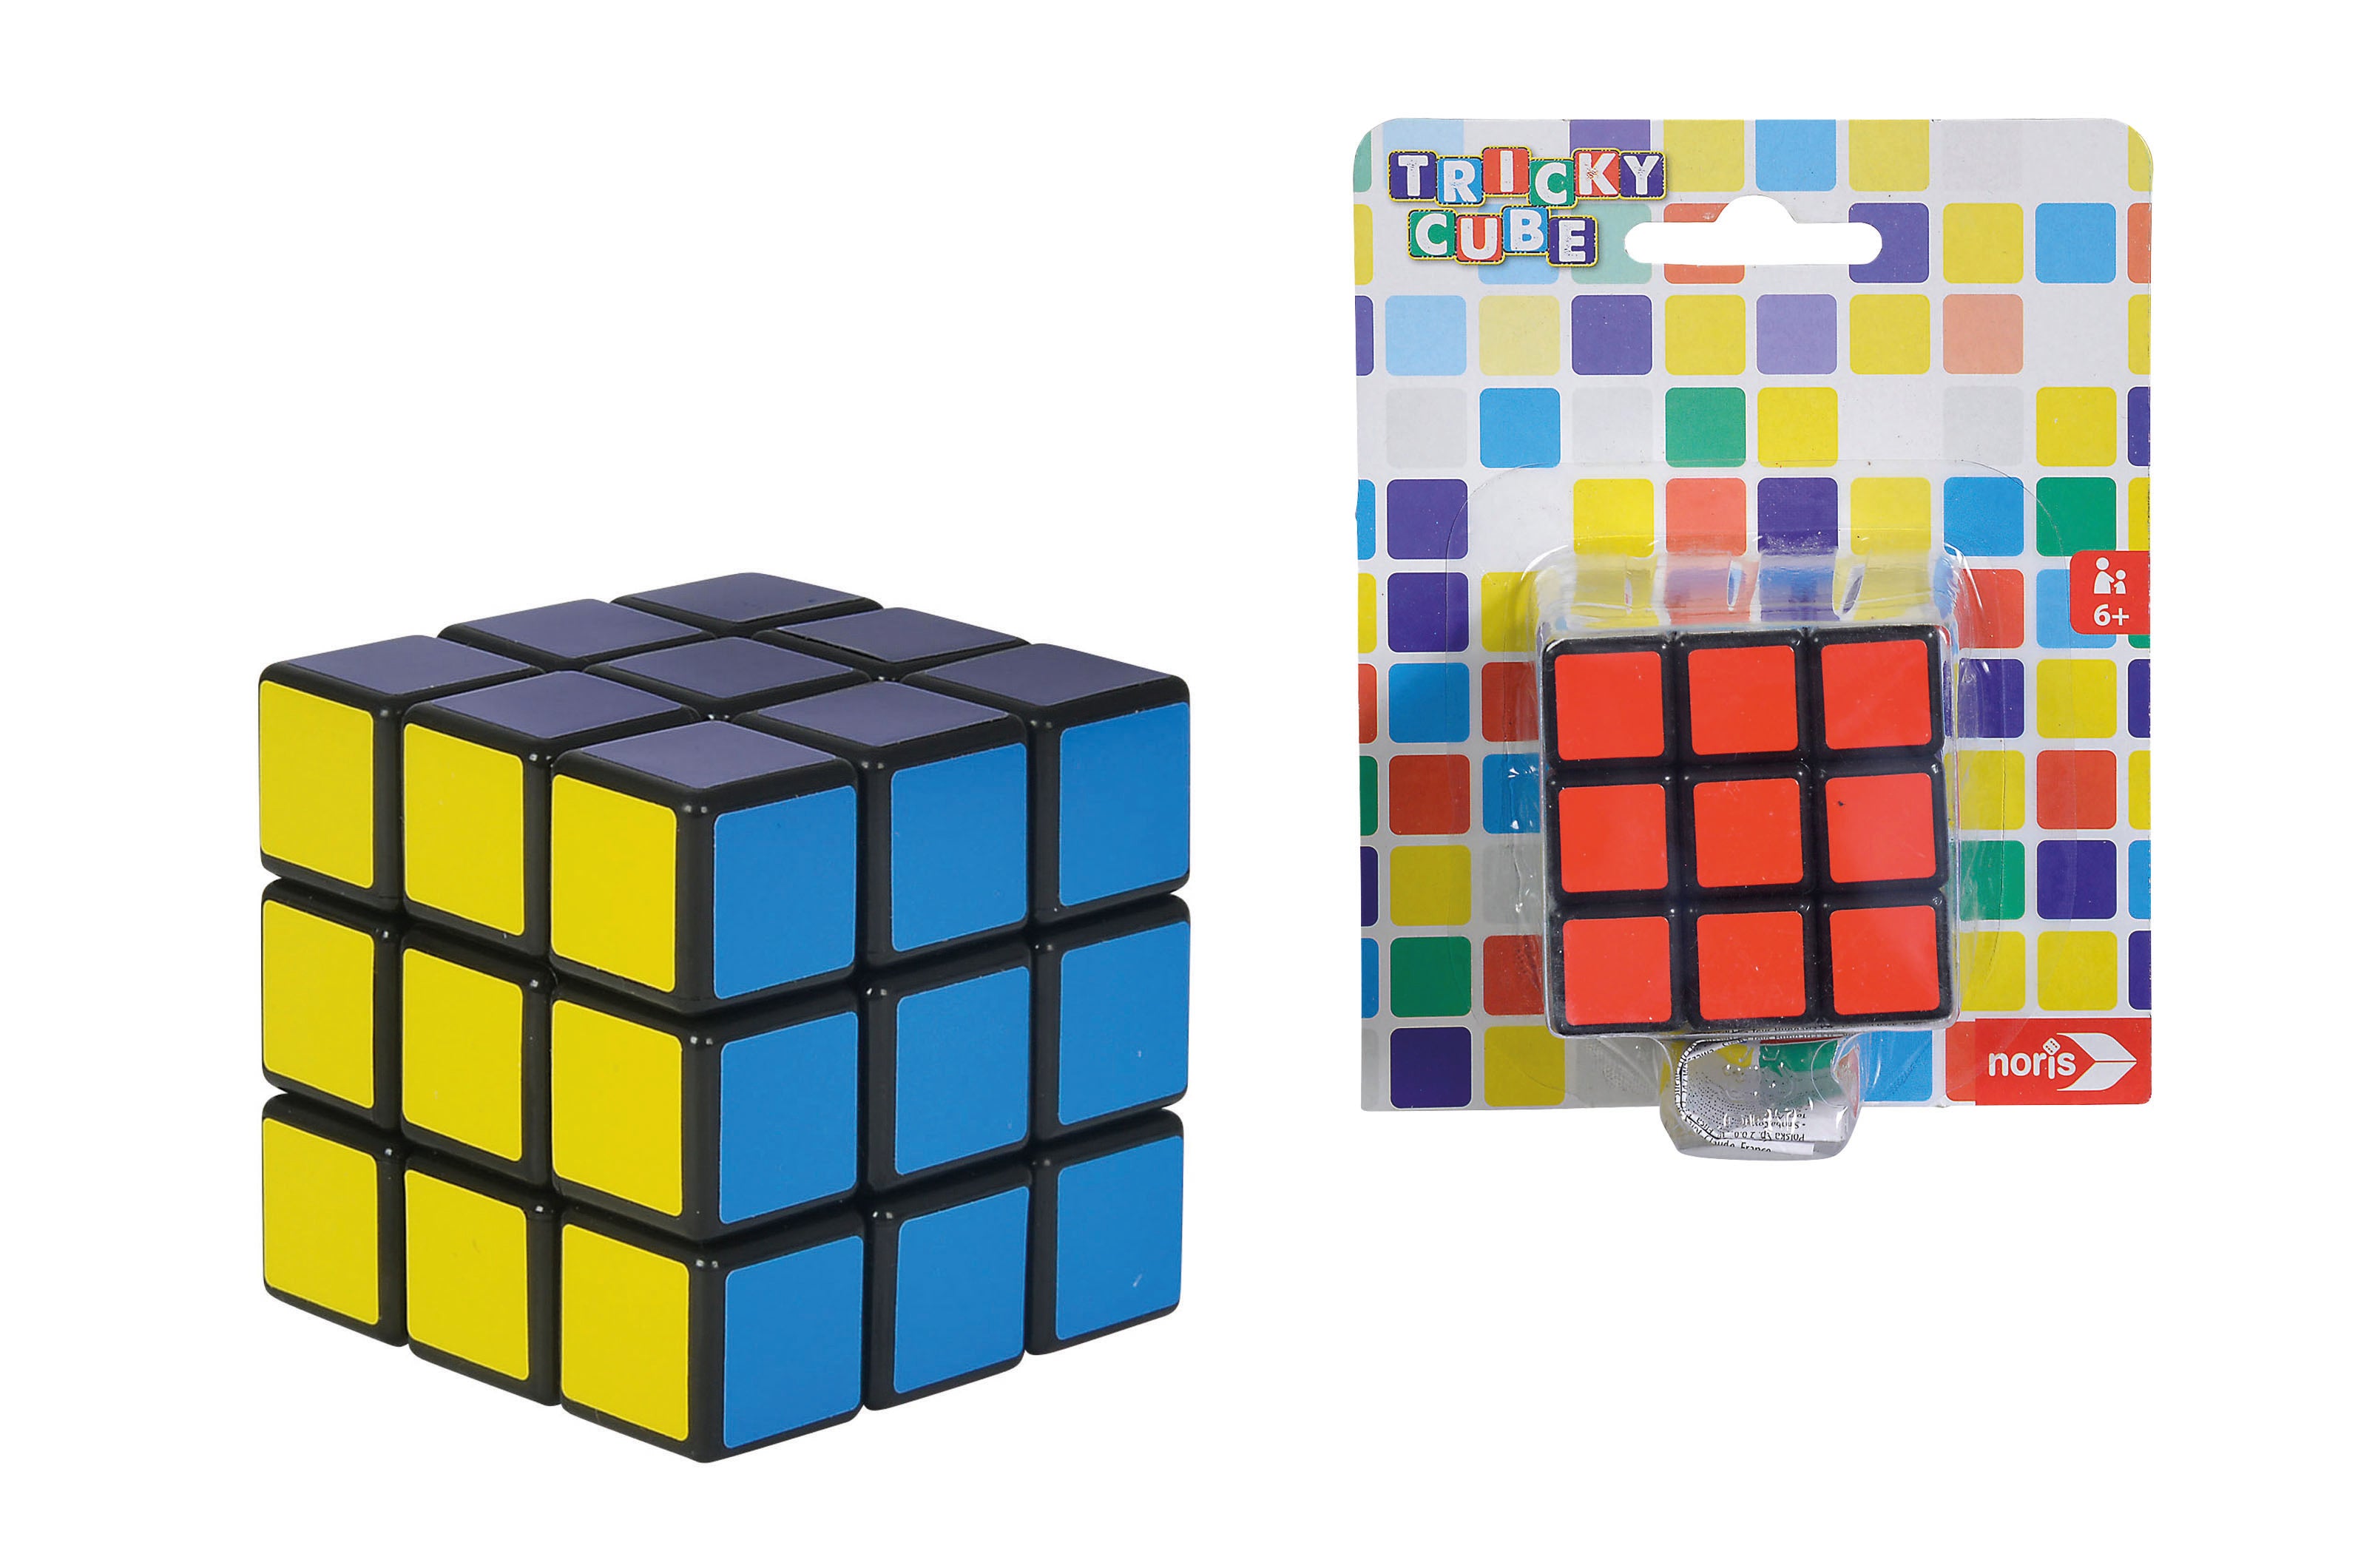 Noris - Tricky Cube